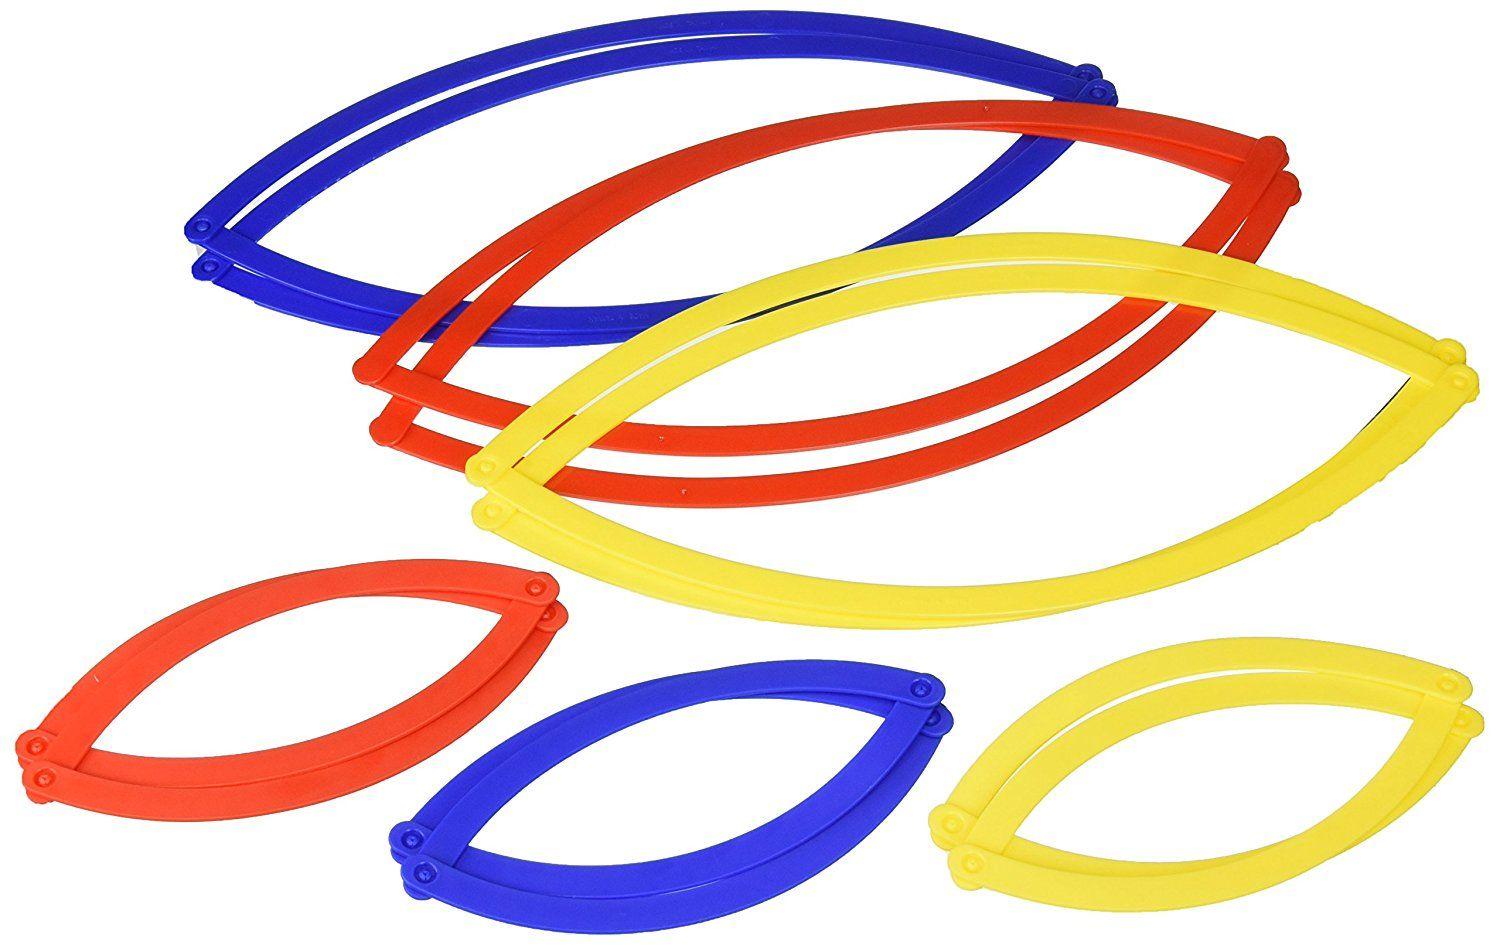 Four Circles Logo - Cheap Four Circles Logo, find Four Circles Logo deals on line at